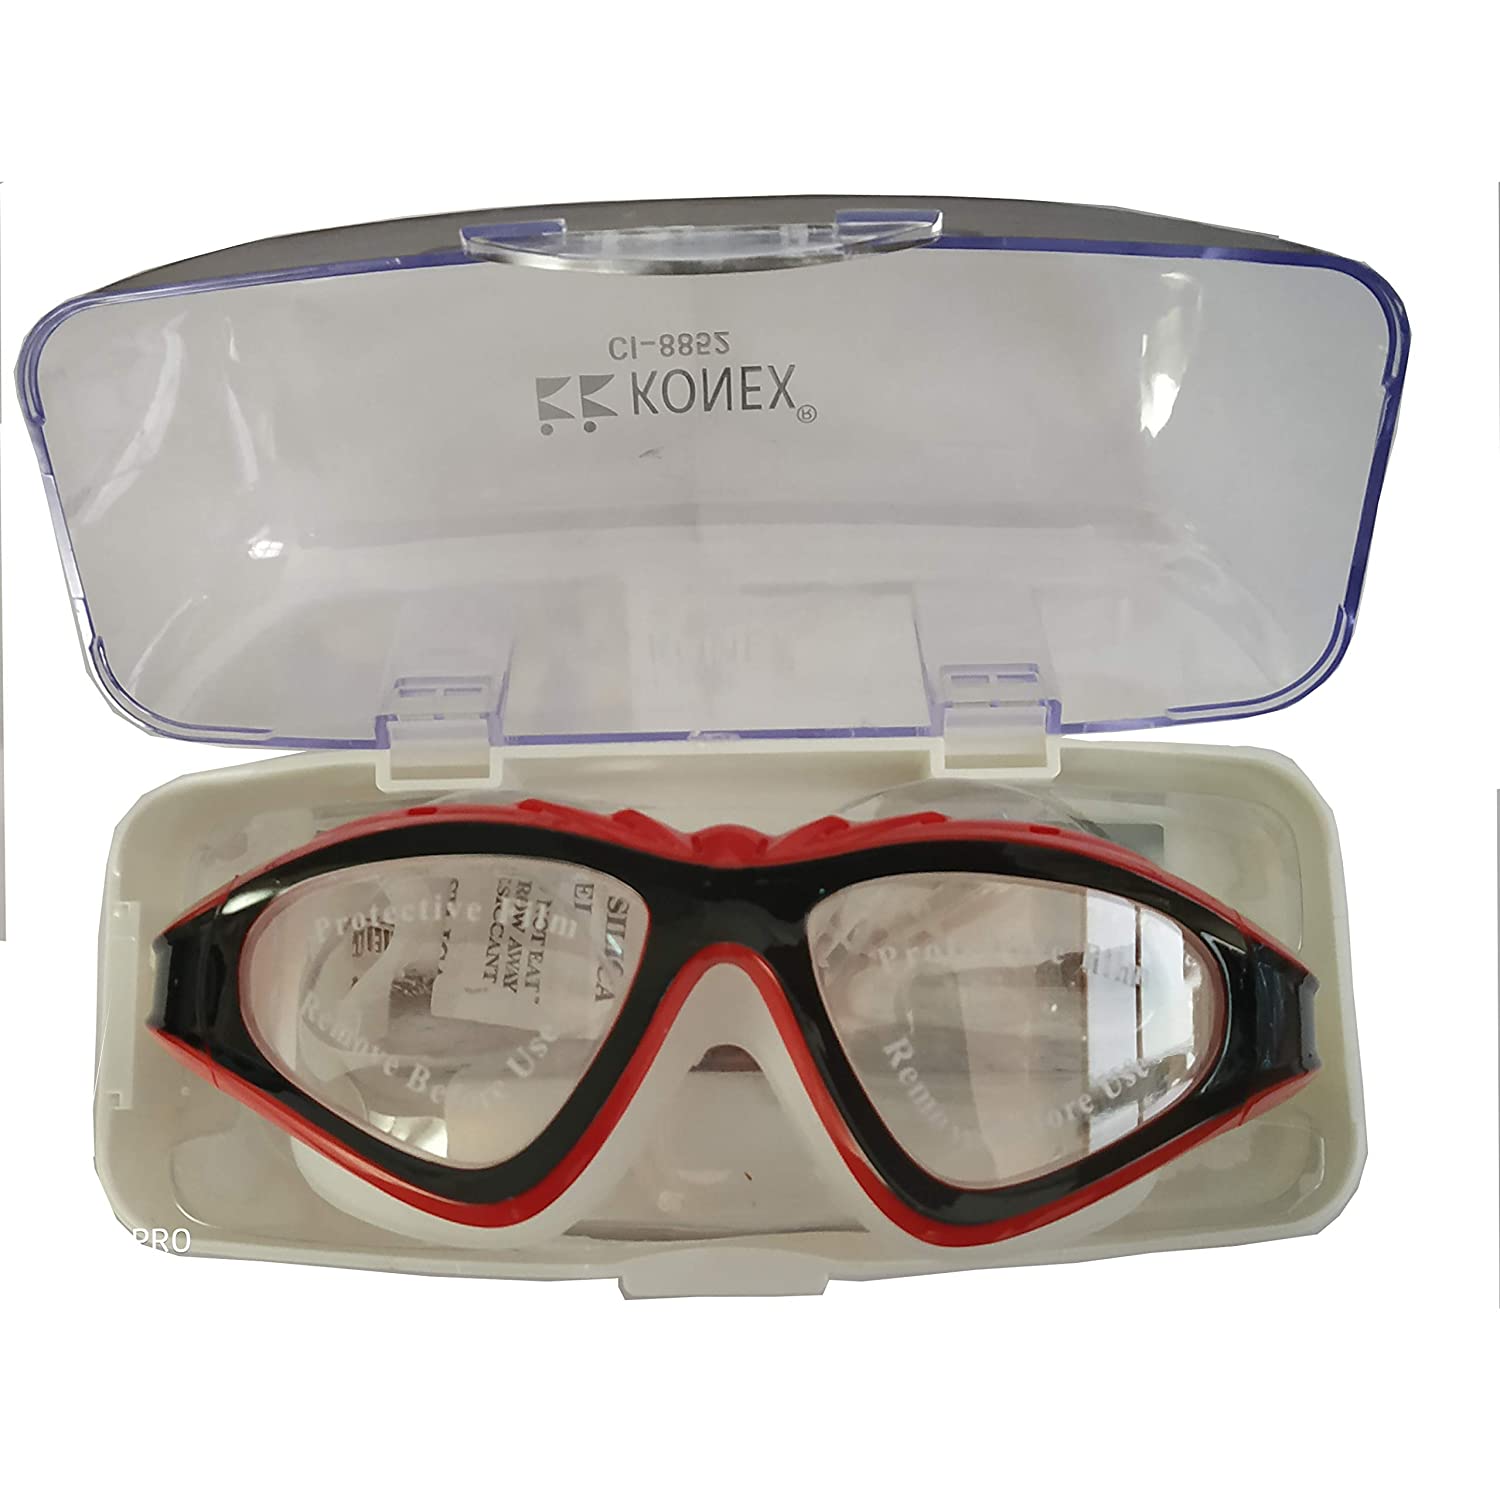 Konex CI-8852 Swimming Goggle, Red/Black - Best Price online Prokicksports.com